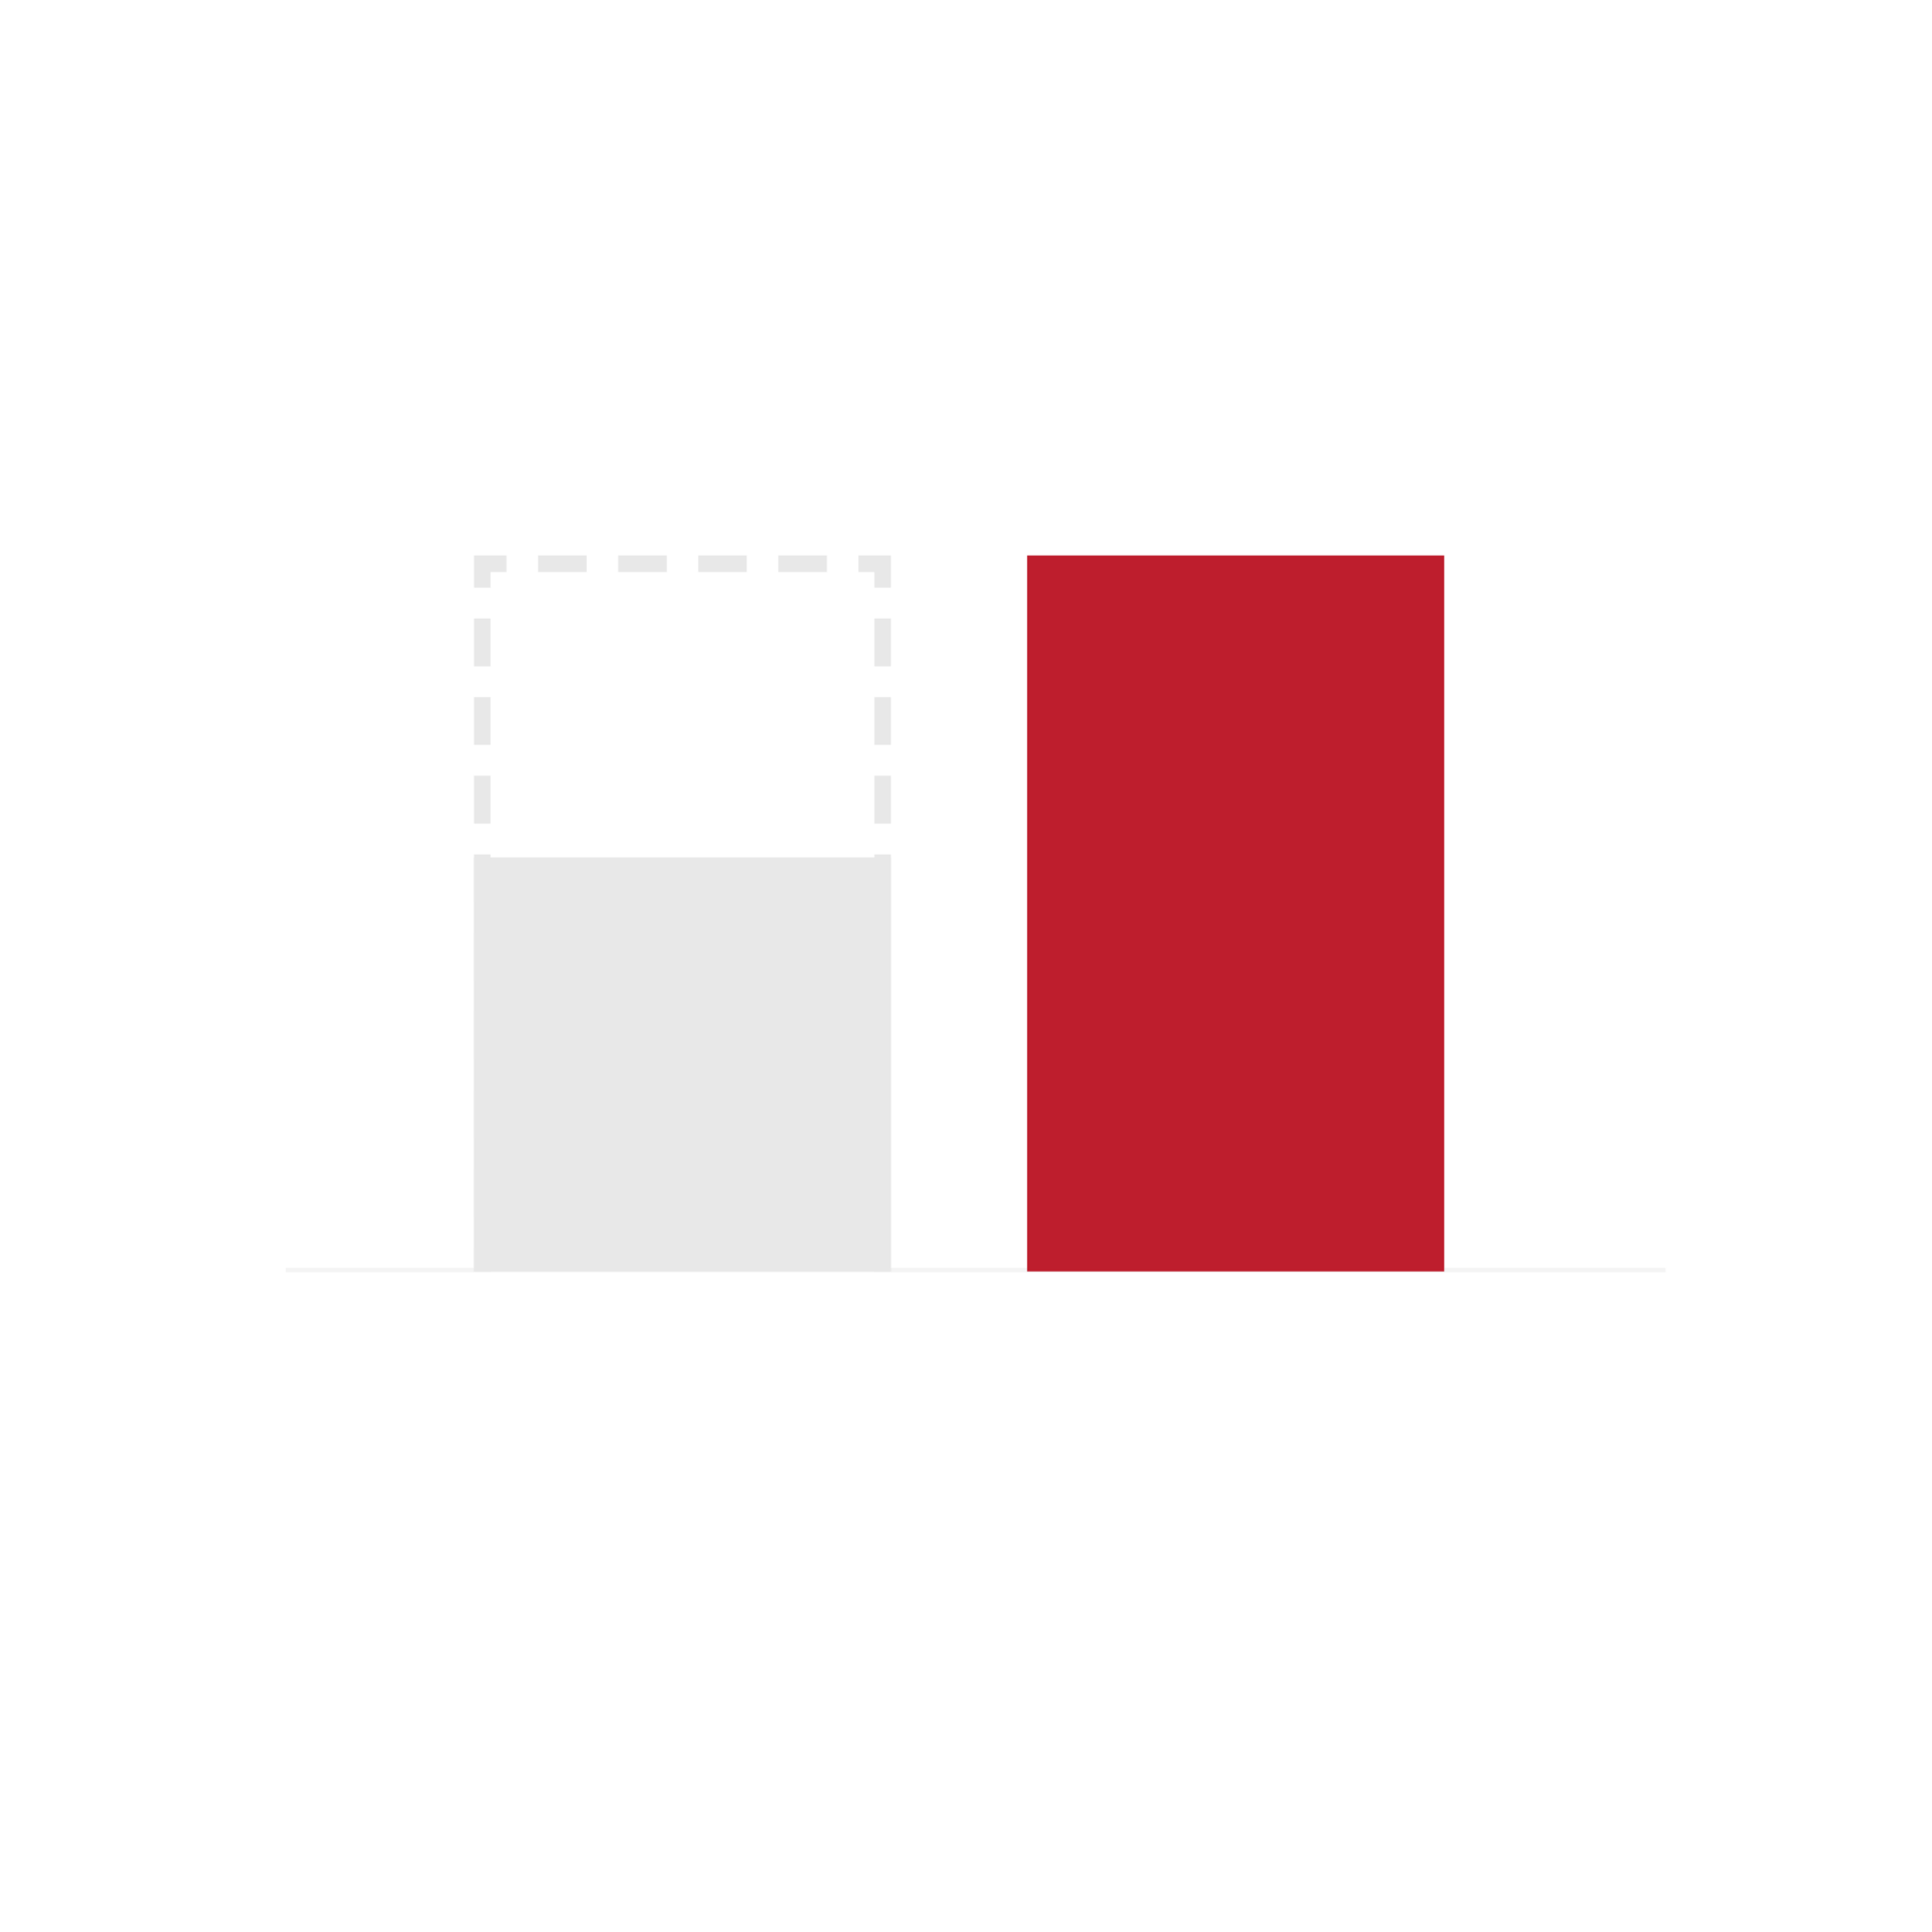 Cookieless revenue increase